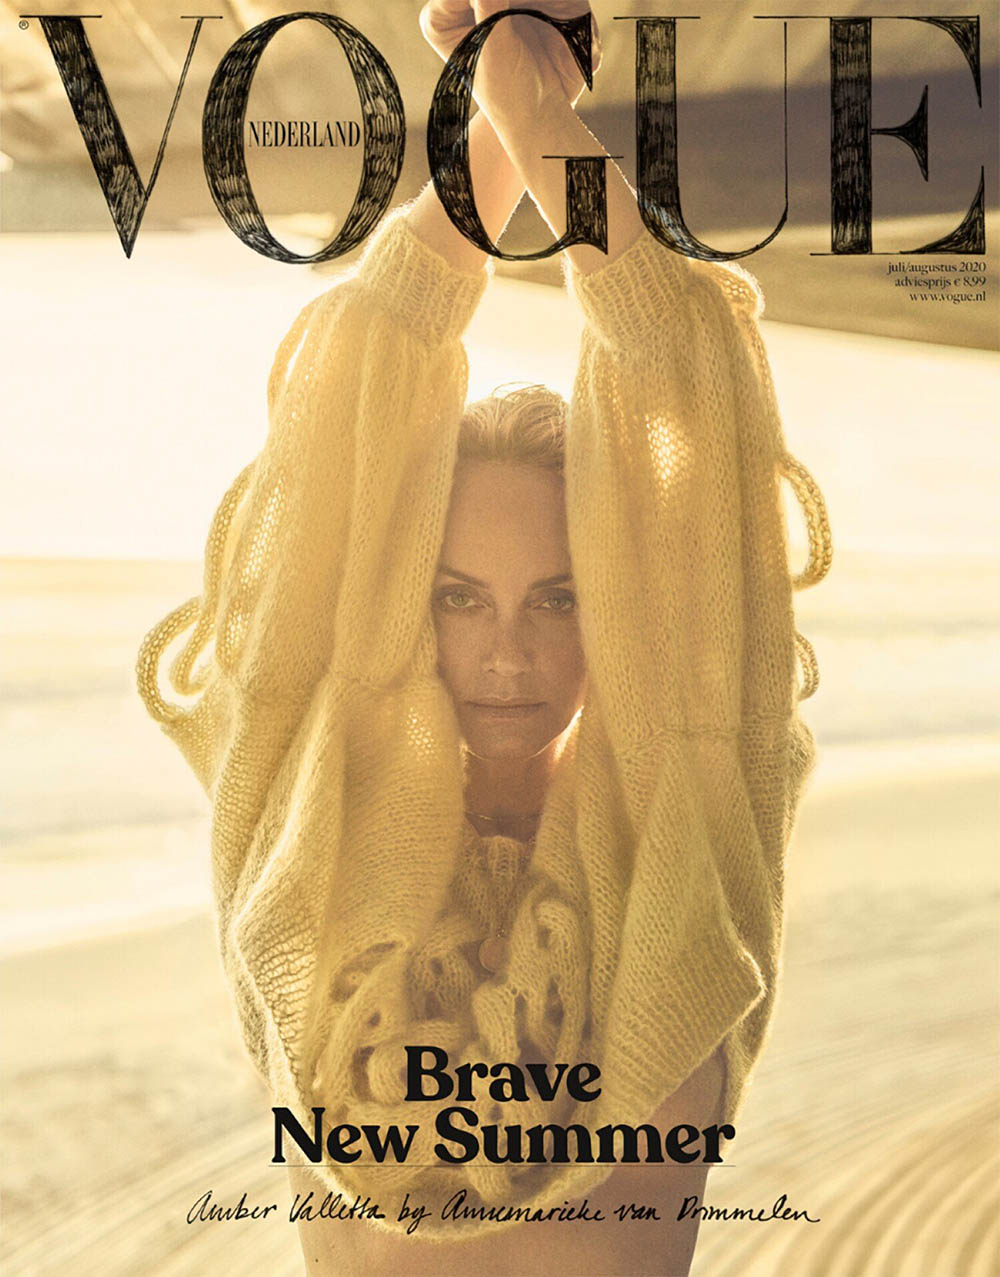 Amber Valletta covers Vogue Netherlands July August 2020 by Annemarieke van Drimmelen